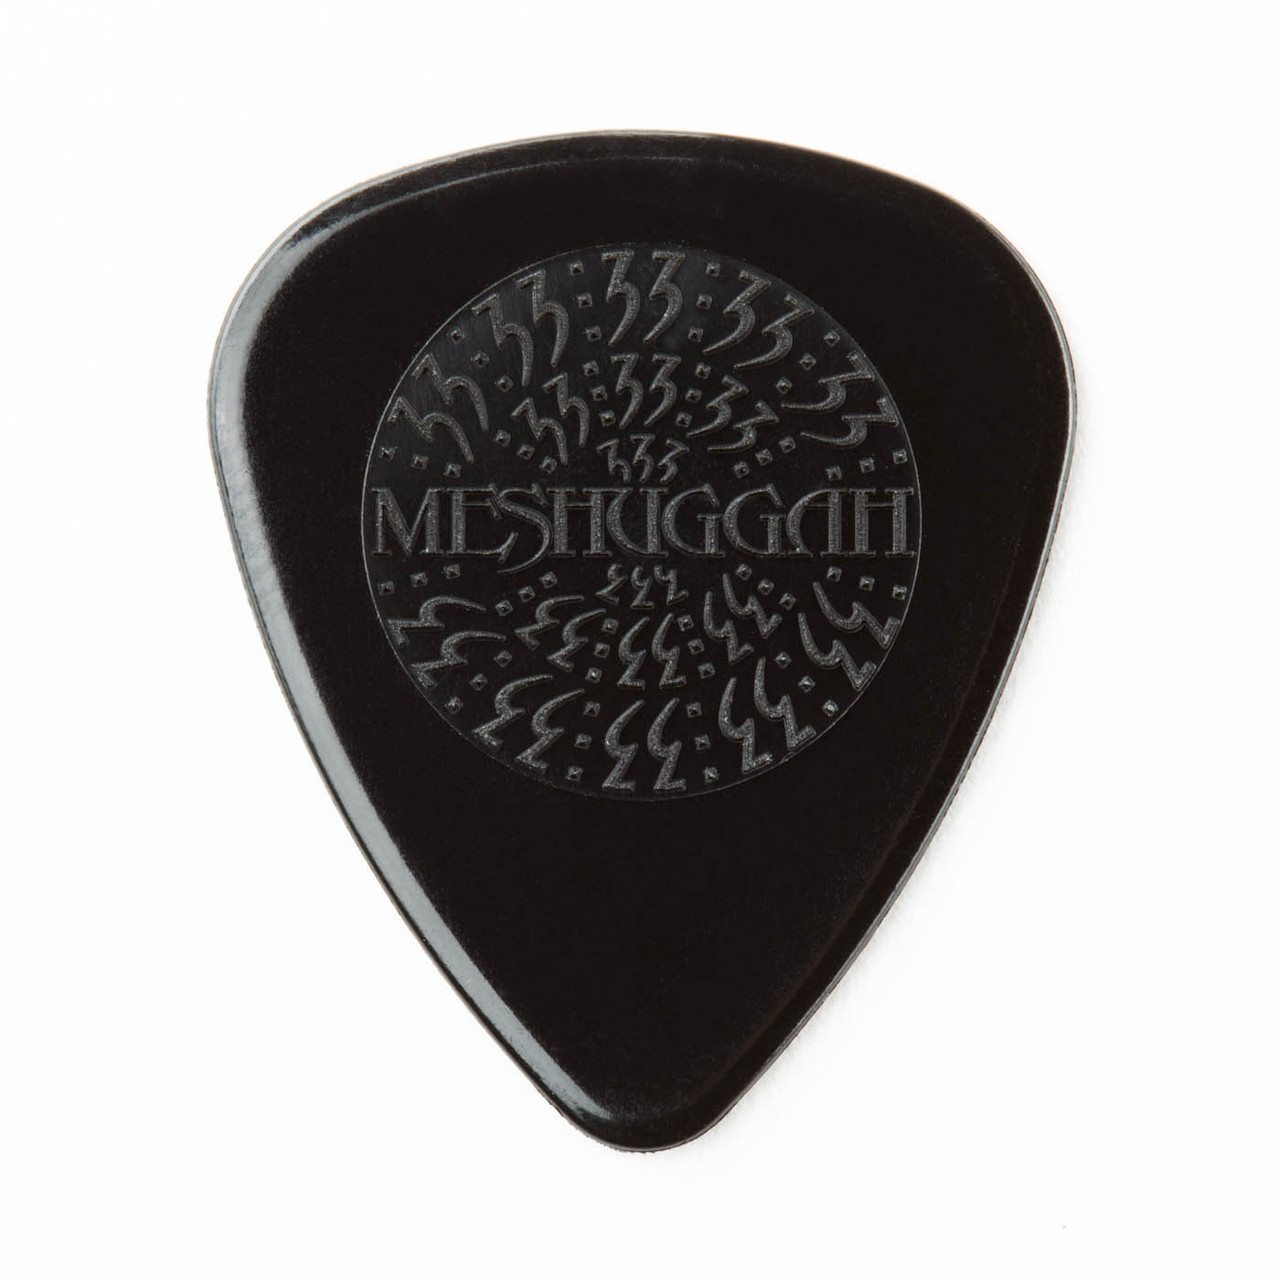 Jim Dunlop Meshuggah Fredrik Thordendal Nylon Pick 45-ft100 Signature X24 - Guitar pick - Variation 1